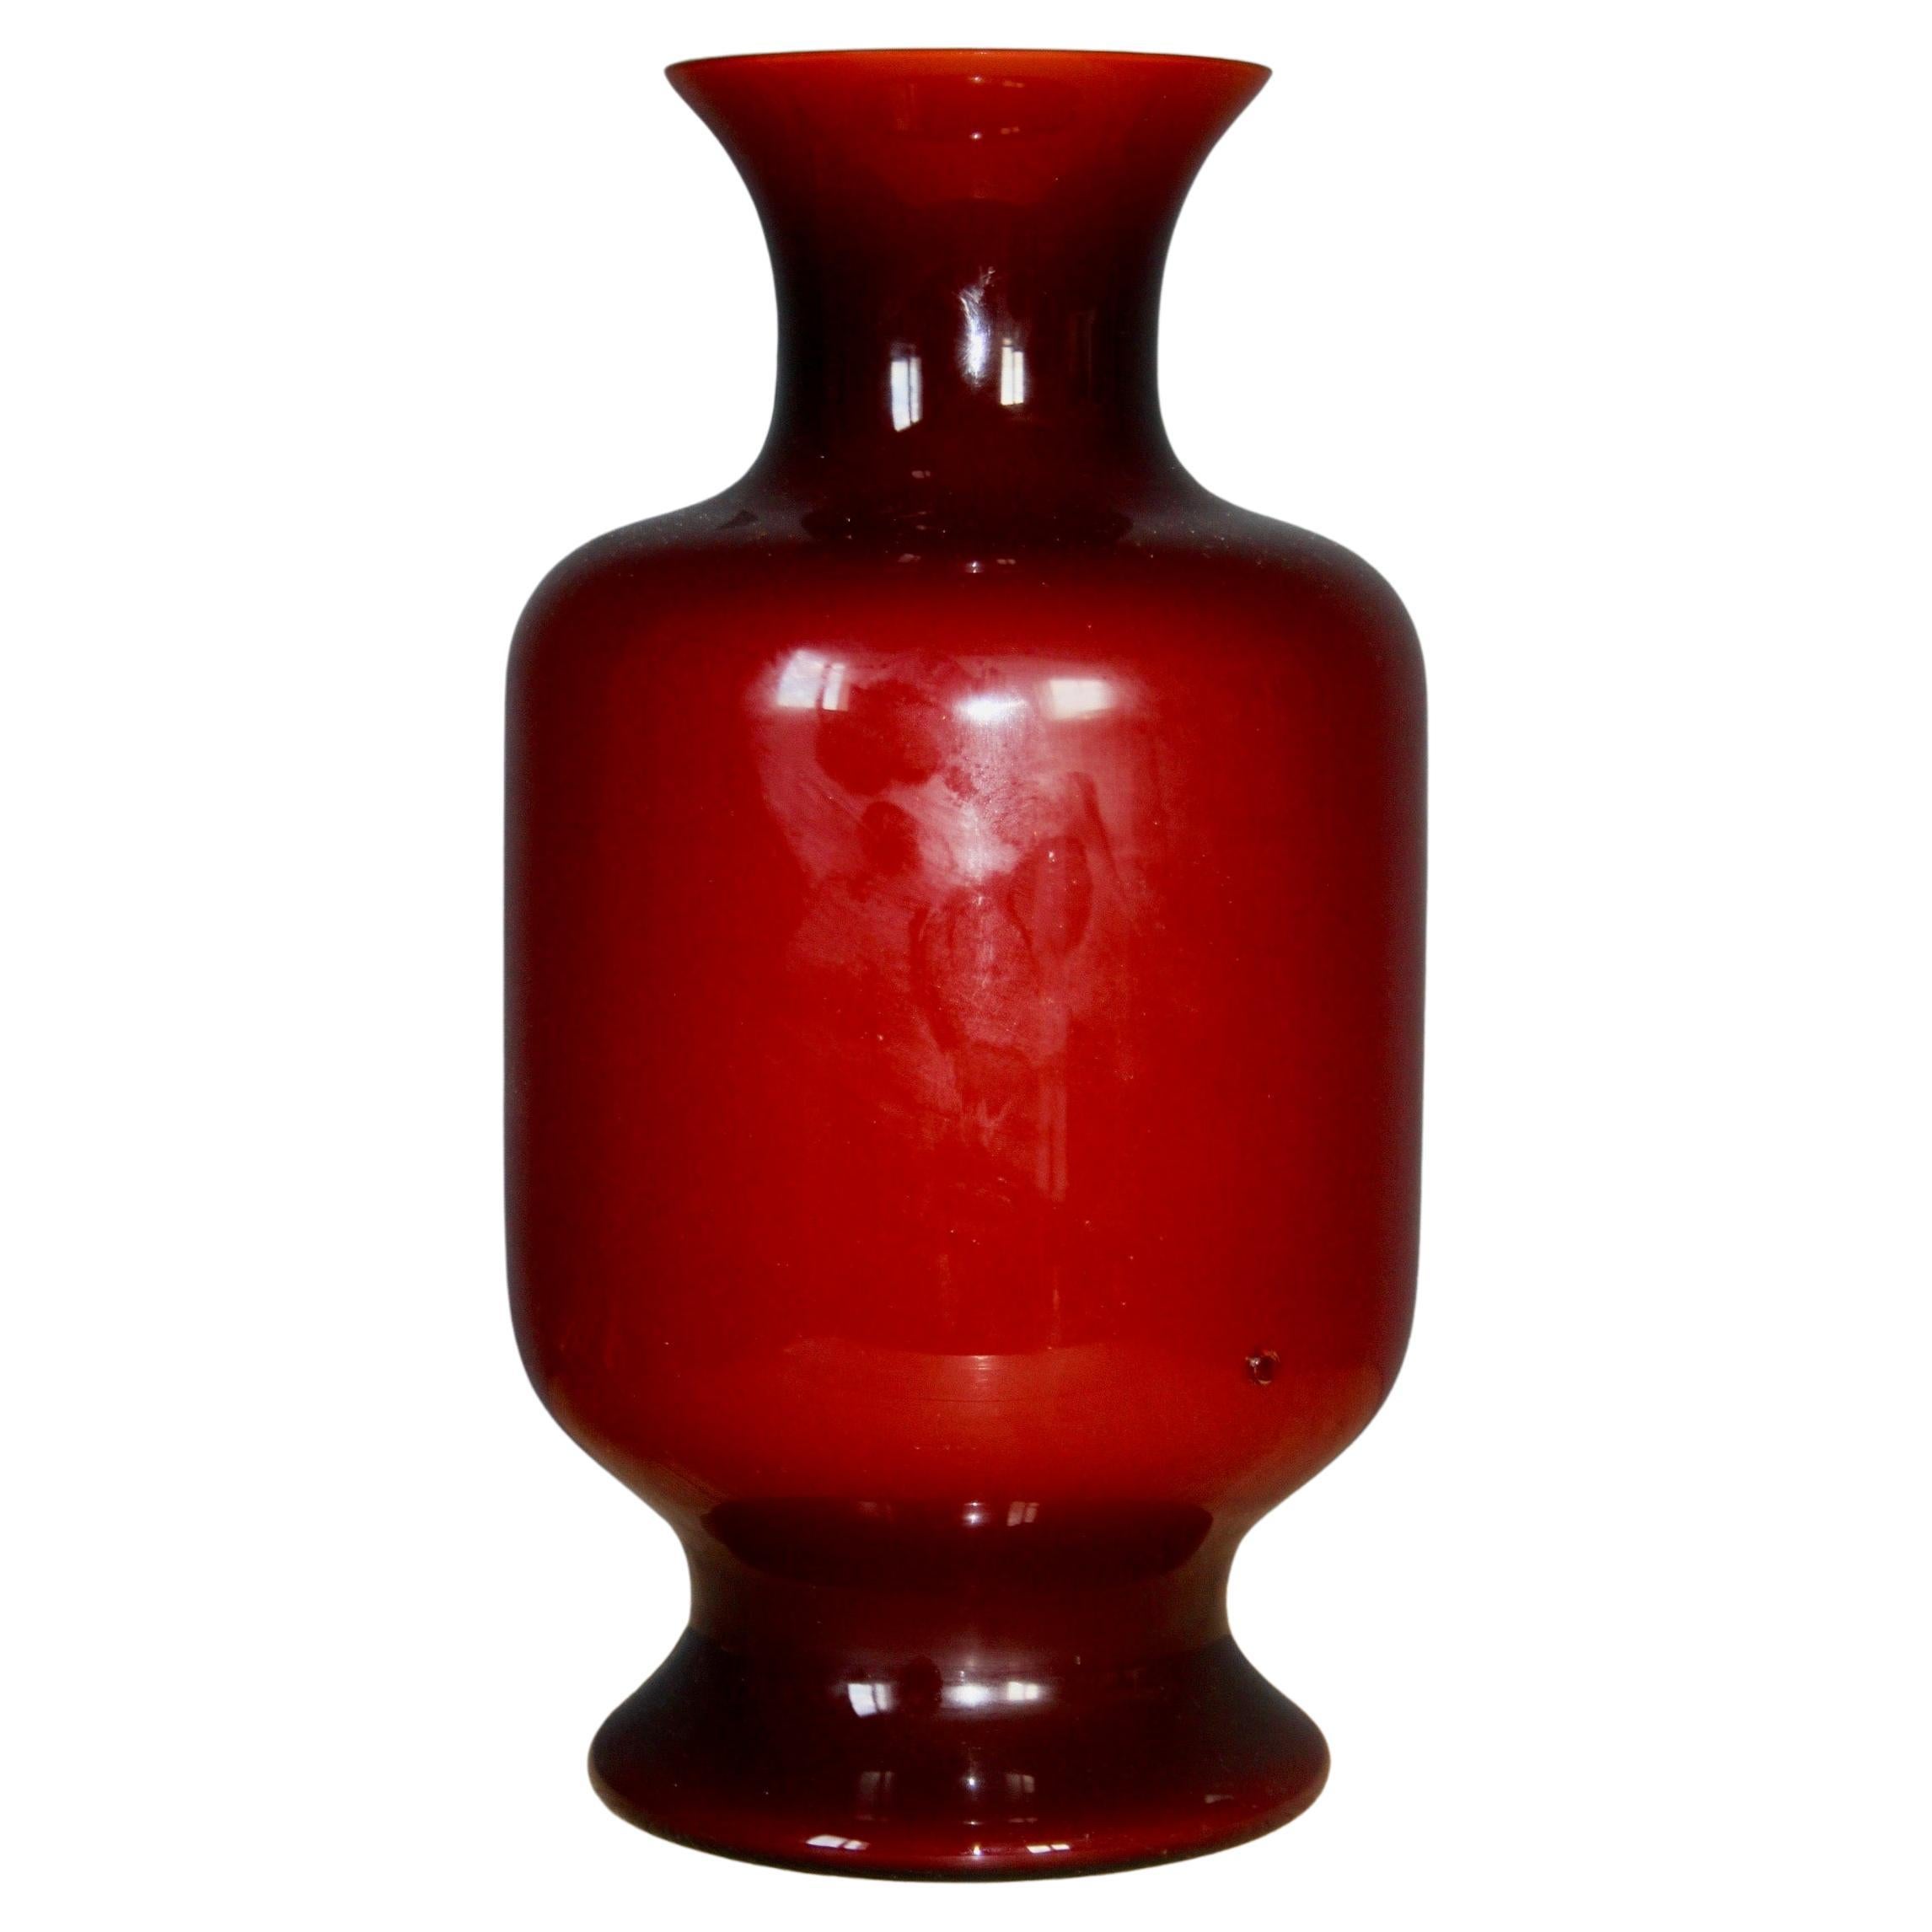 Red Glass La Murrina Vase